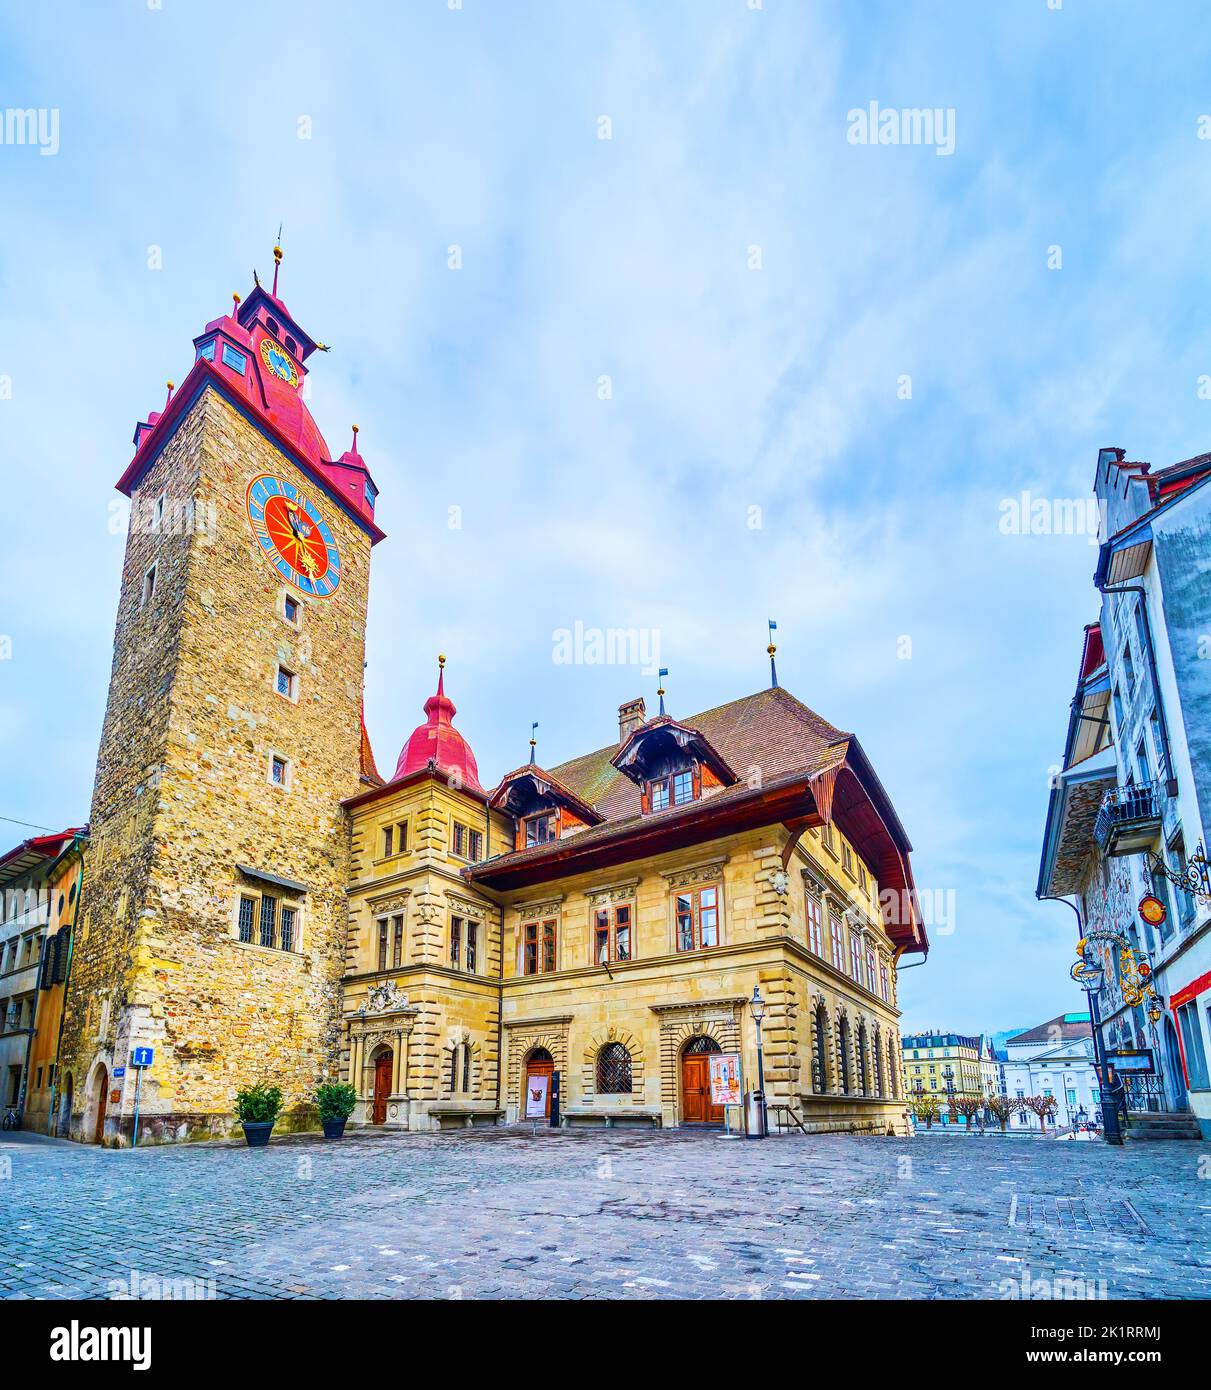 LUCERNE, SWITZERLAND - MARCH 30, 2022: Medieval stone Rathaus (town hall) with clock tower on Kornmarkt square, on March 30 in Lucerne, Switzerland Stock Photo